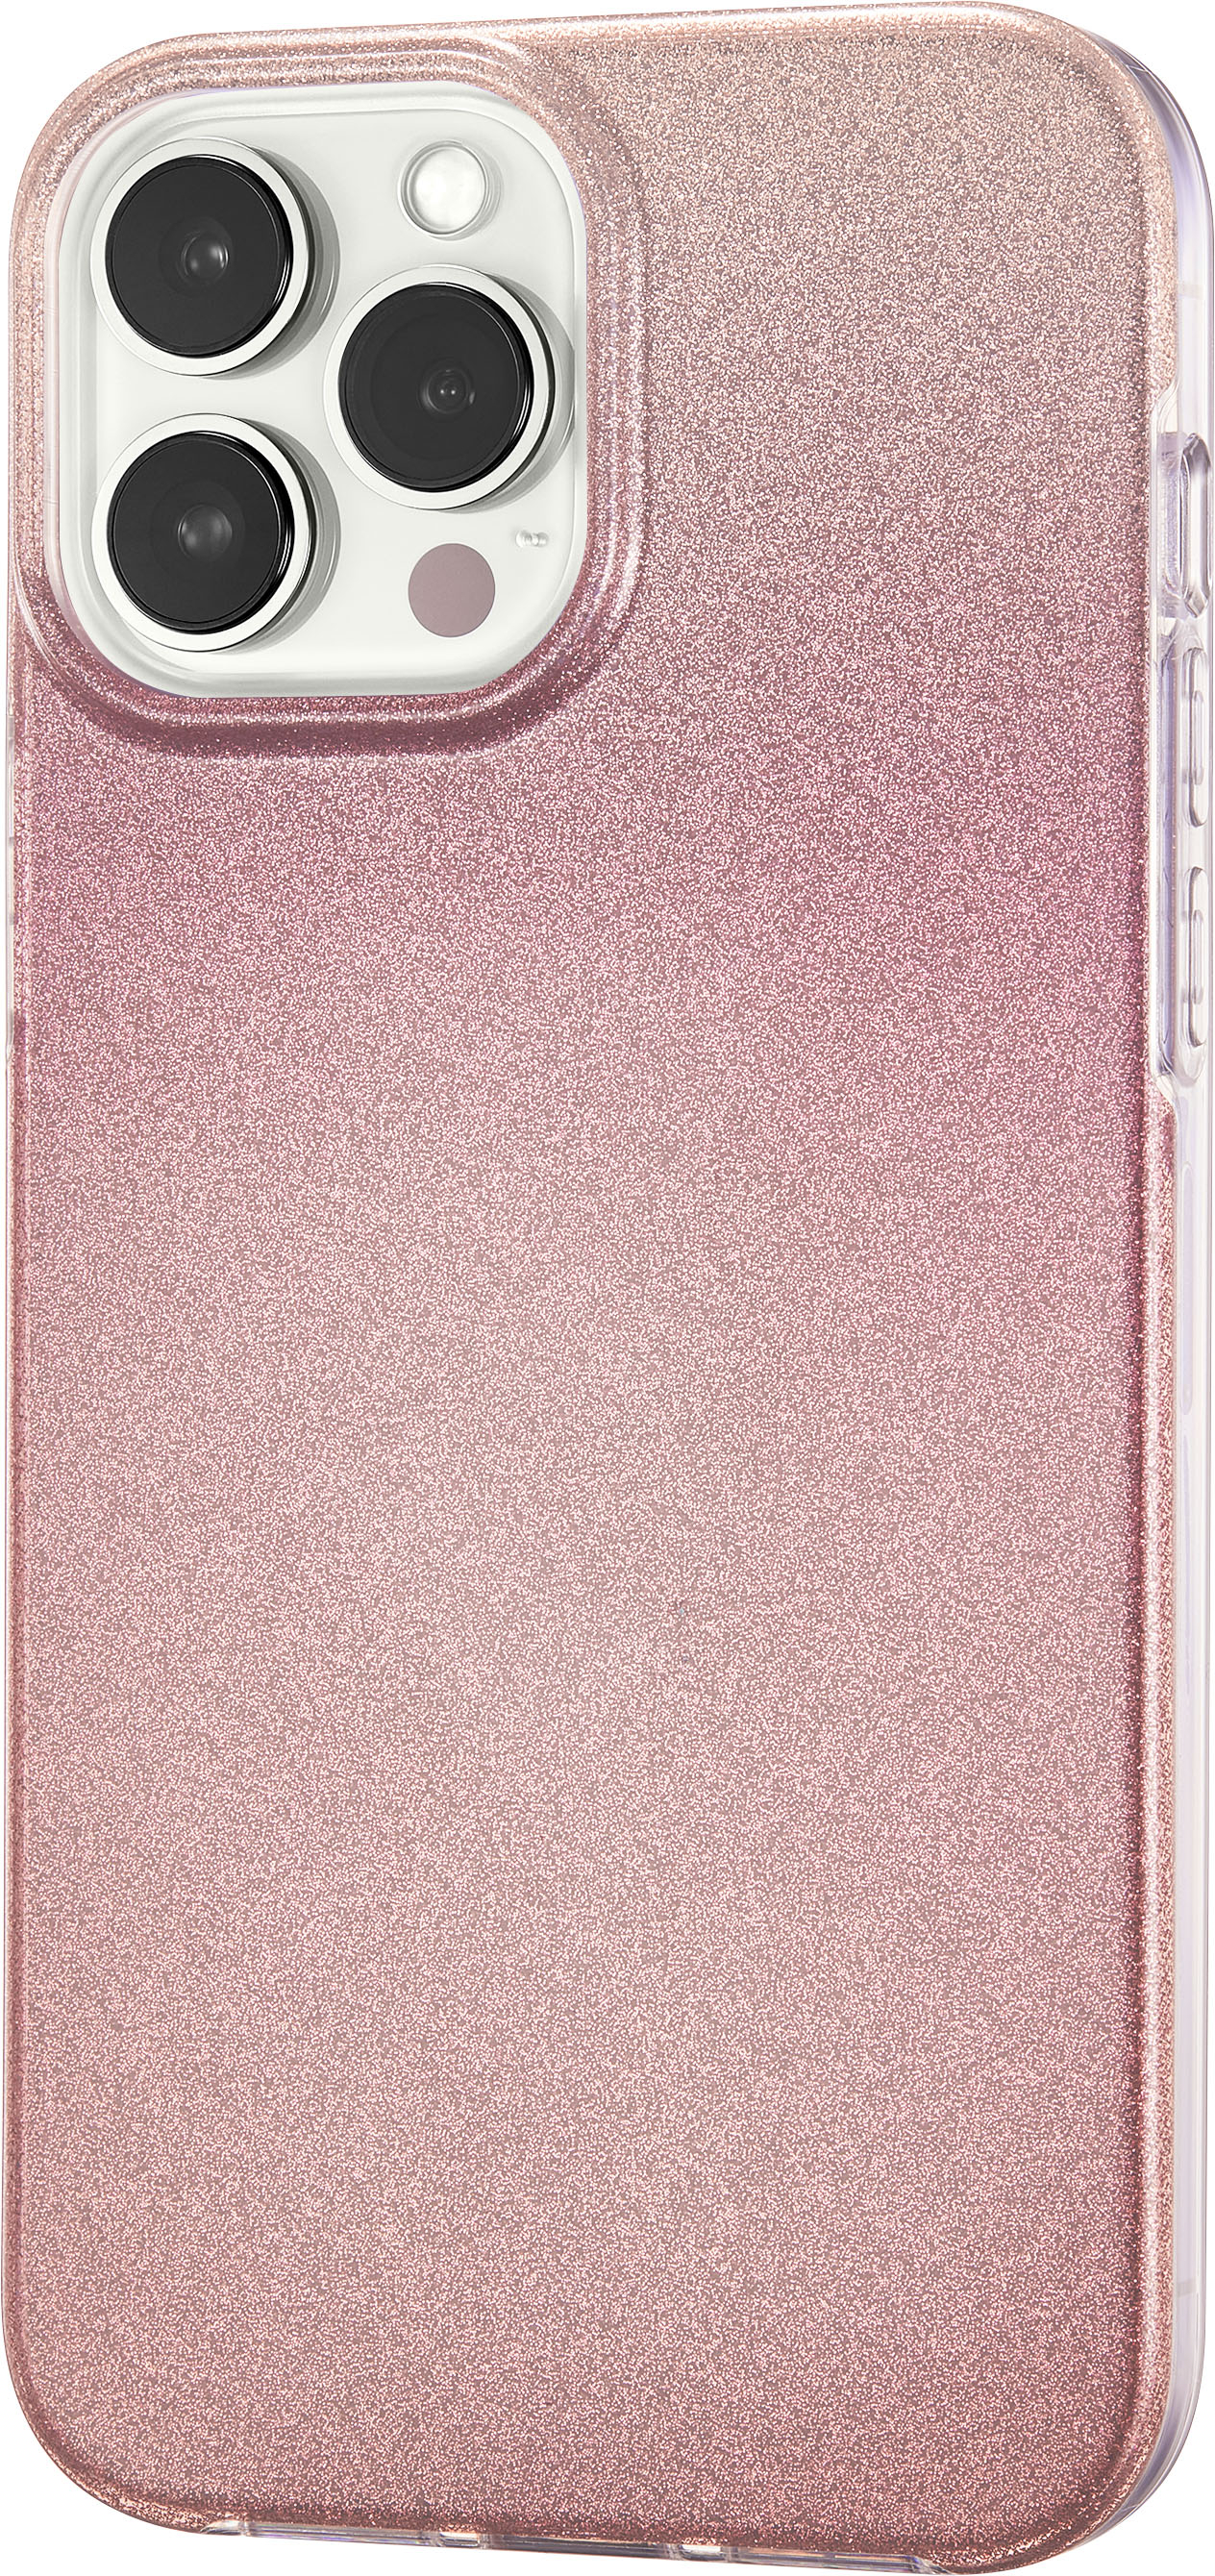 Capa hardbox iPhone 12 Pro Max rosa.